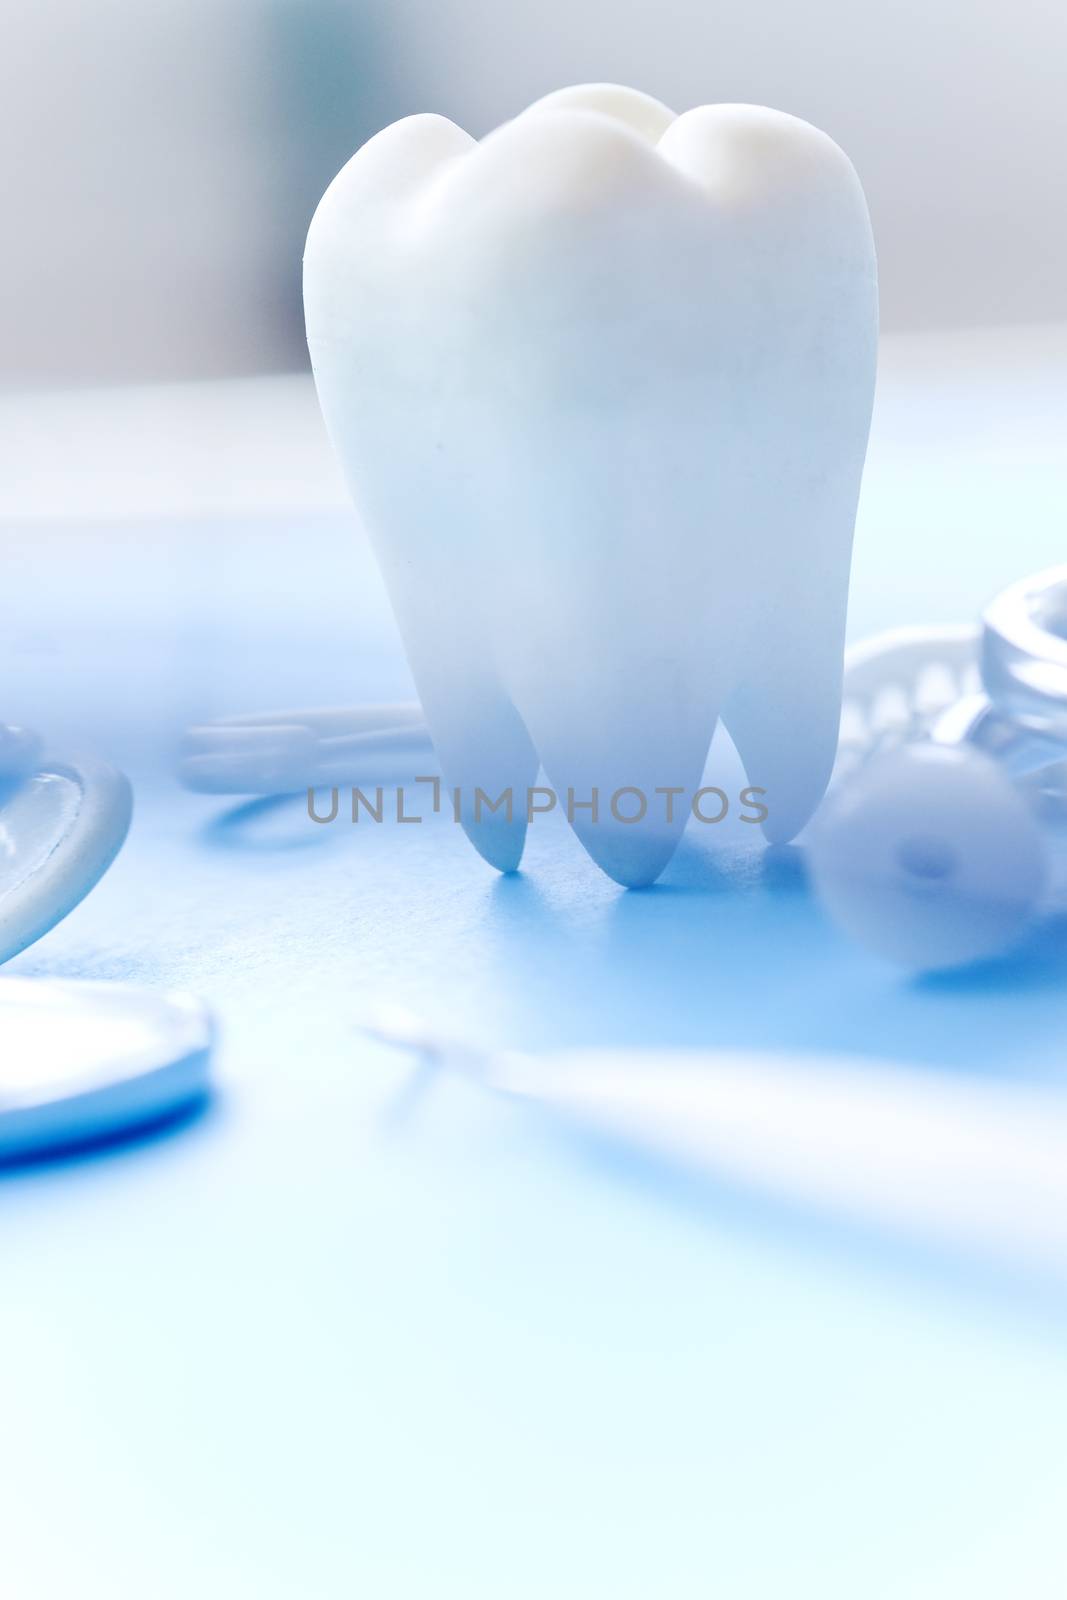 dental hygiene background by ponsulak